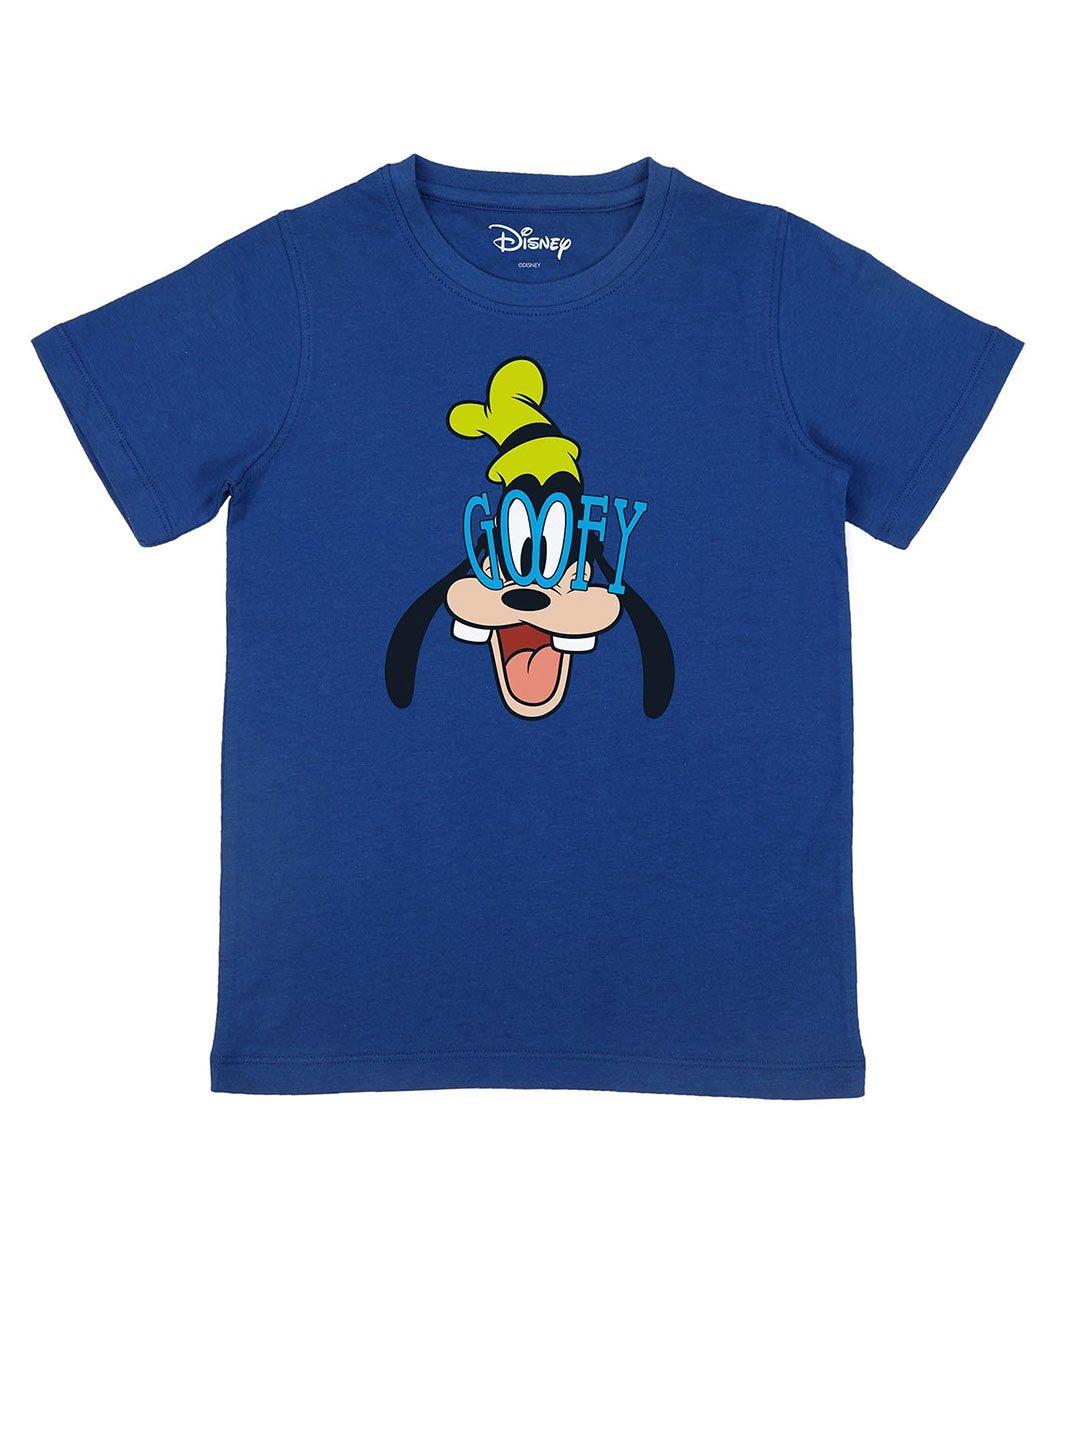 disney by wear your mind boys blue goofy printed t-shirt